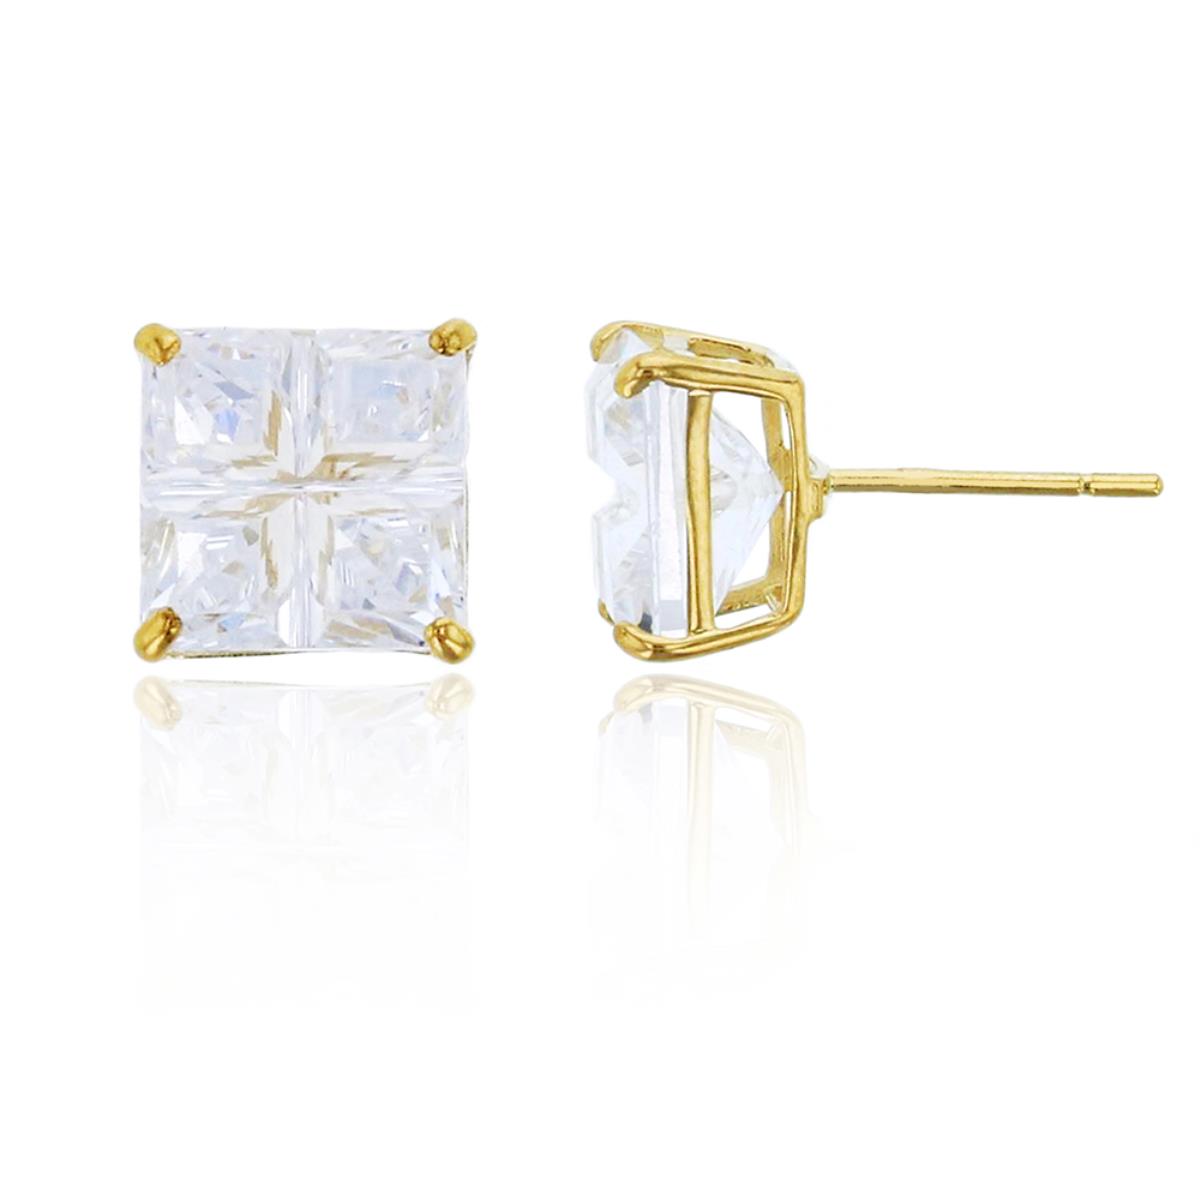 14K Yellow Gold 5mm 4-Segment Square CZ Basket Stud Earring